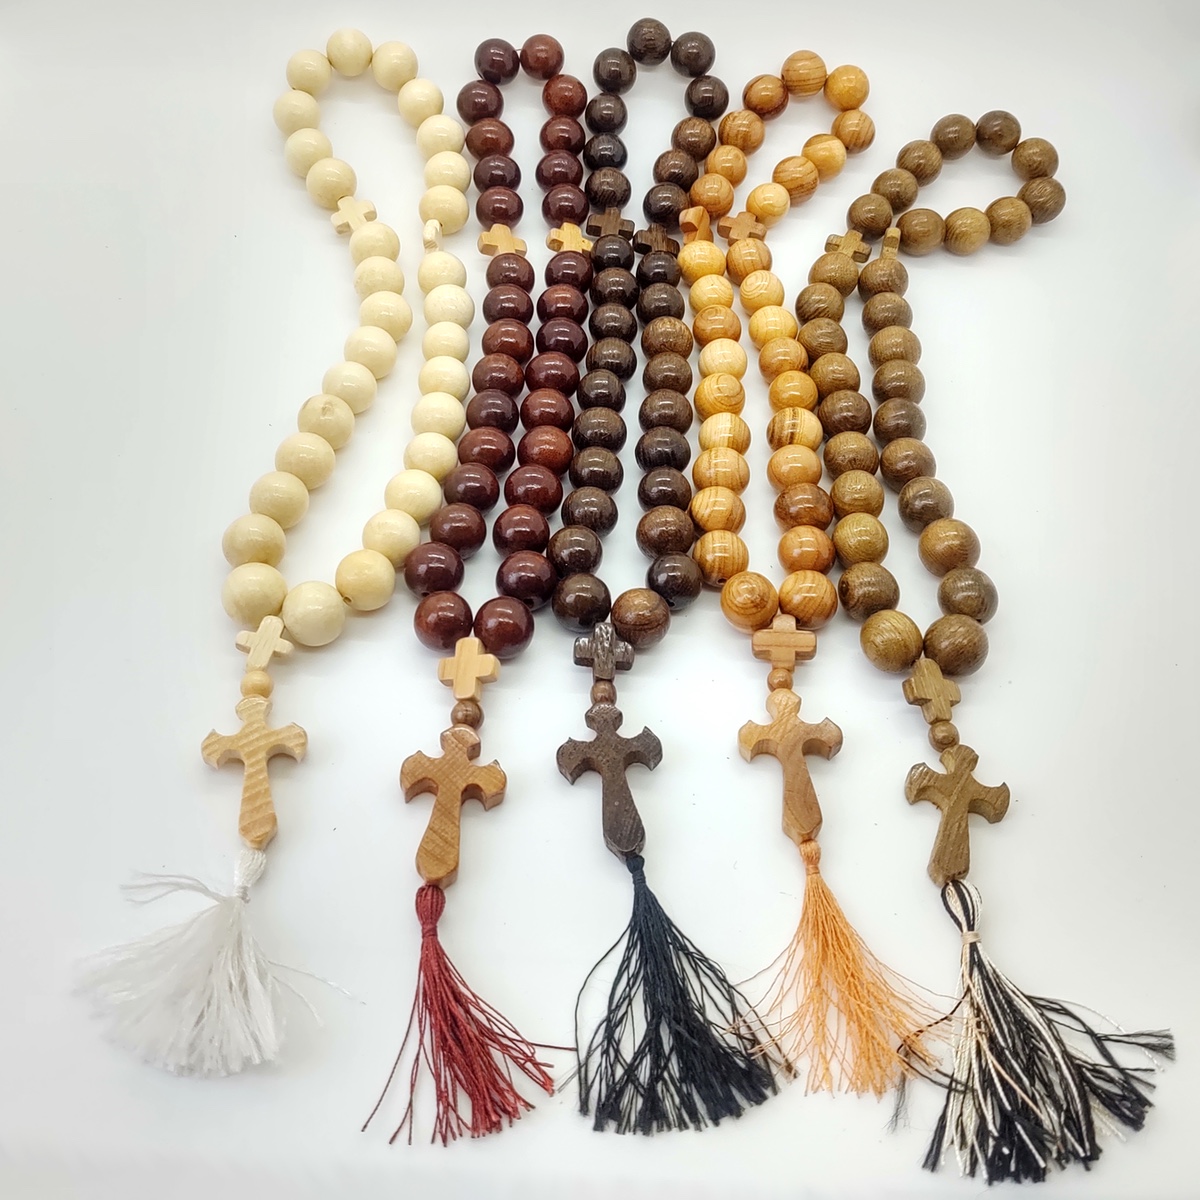 Wood 30 bead Prayer Rope - Large Beads, 5 colors